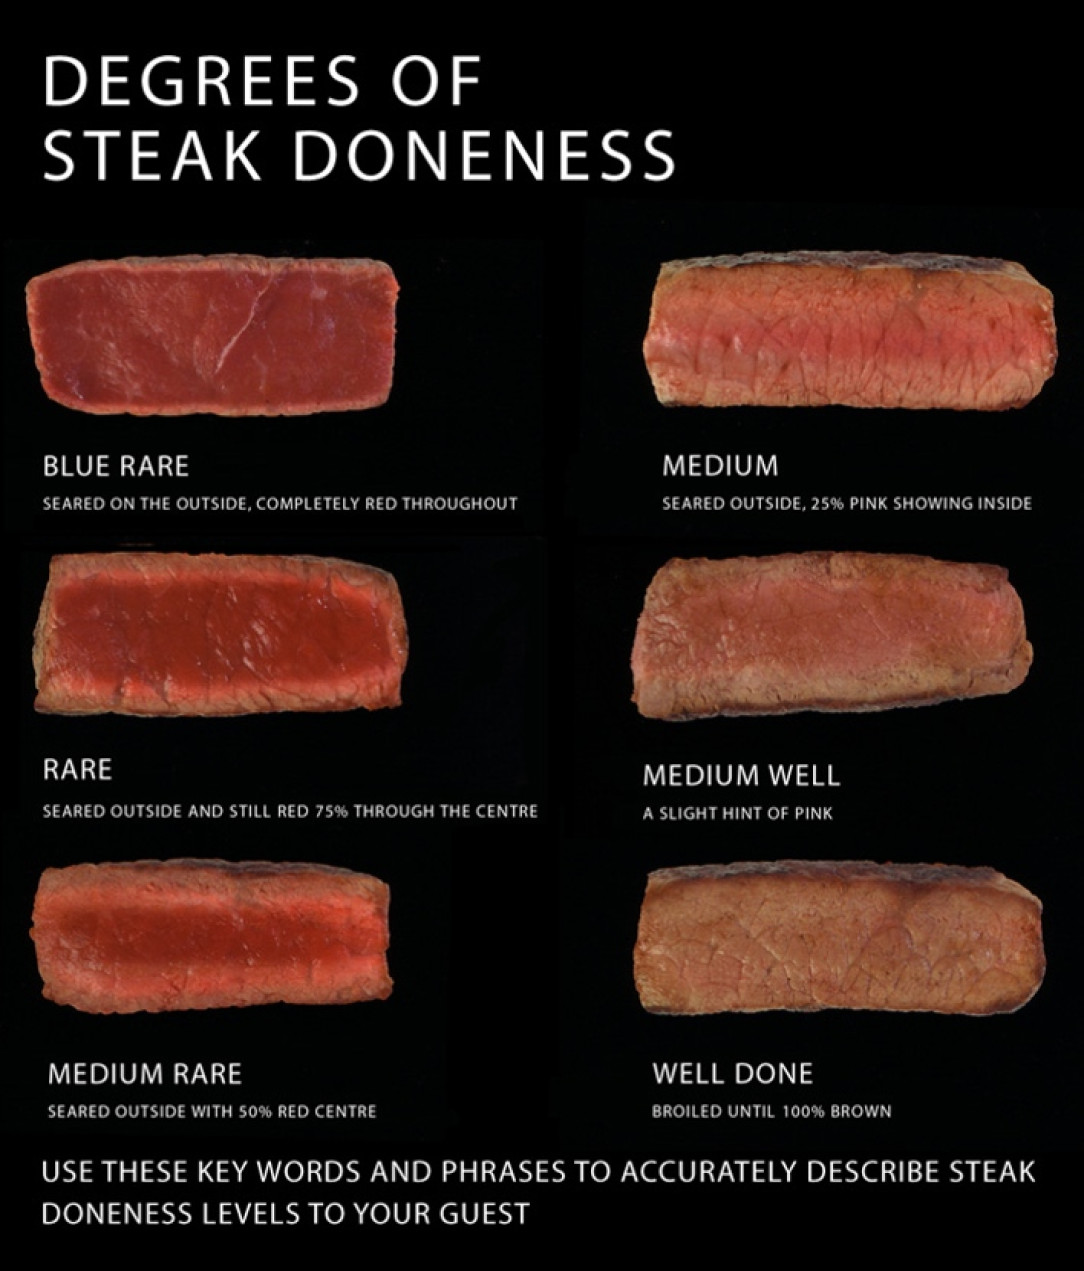 Desgress of Steak Doneness